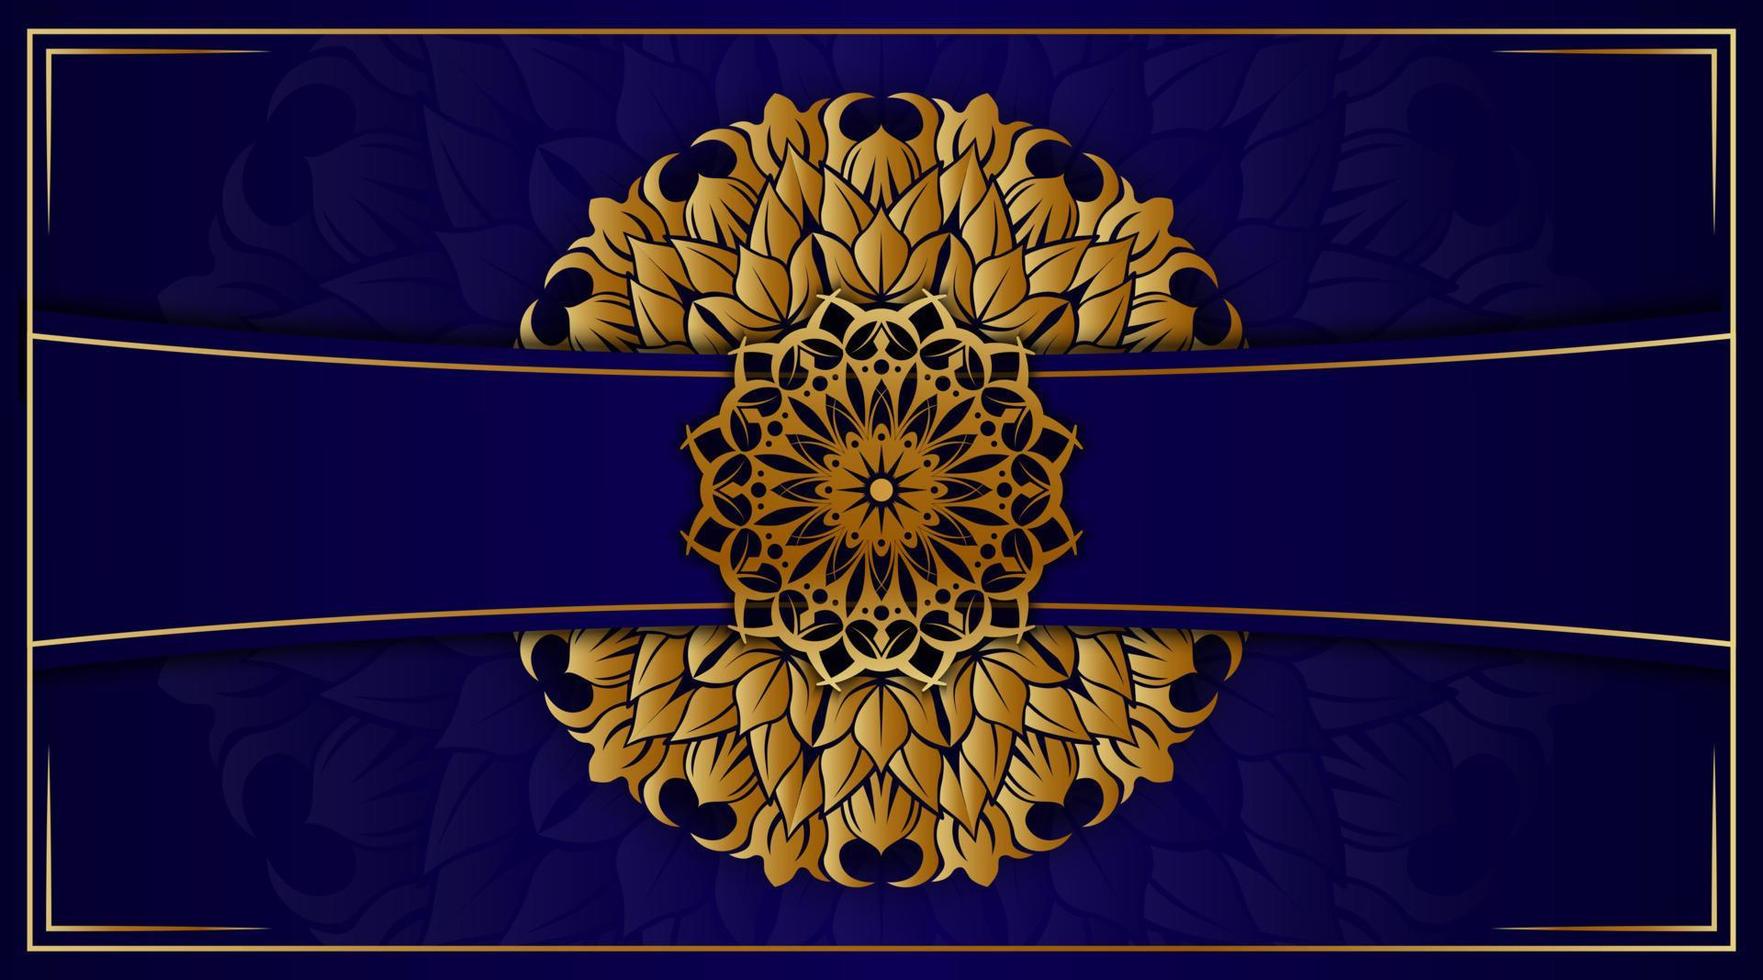 background vector design, with golden mandala decoration